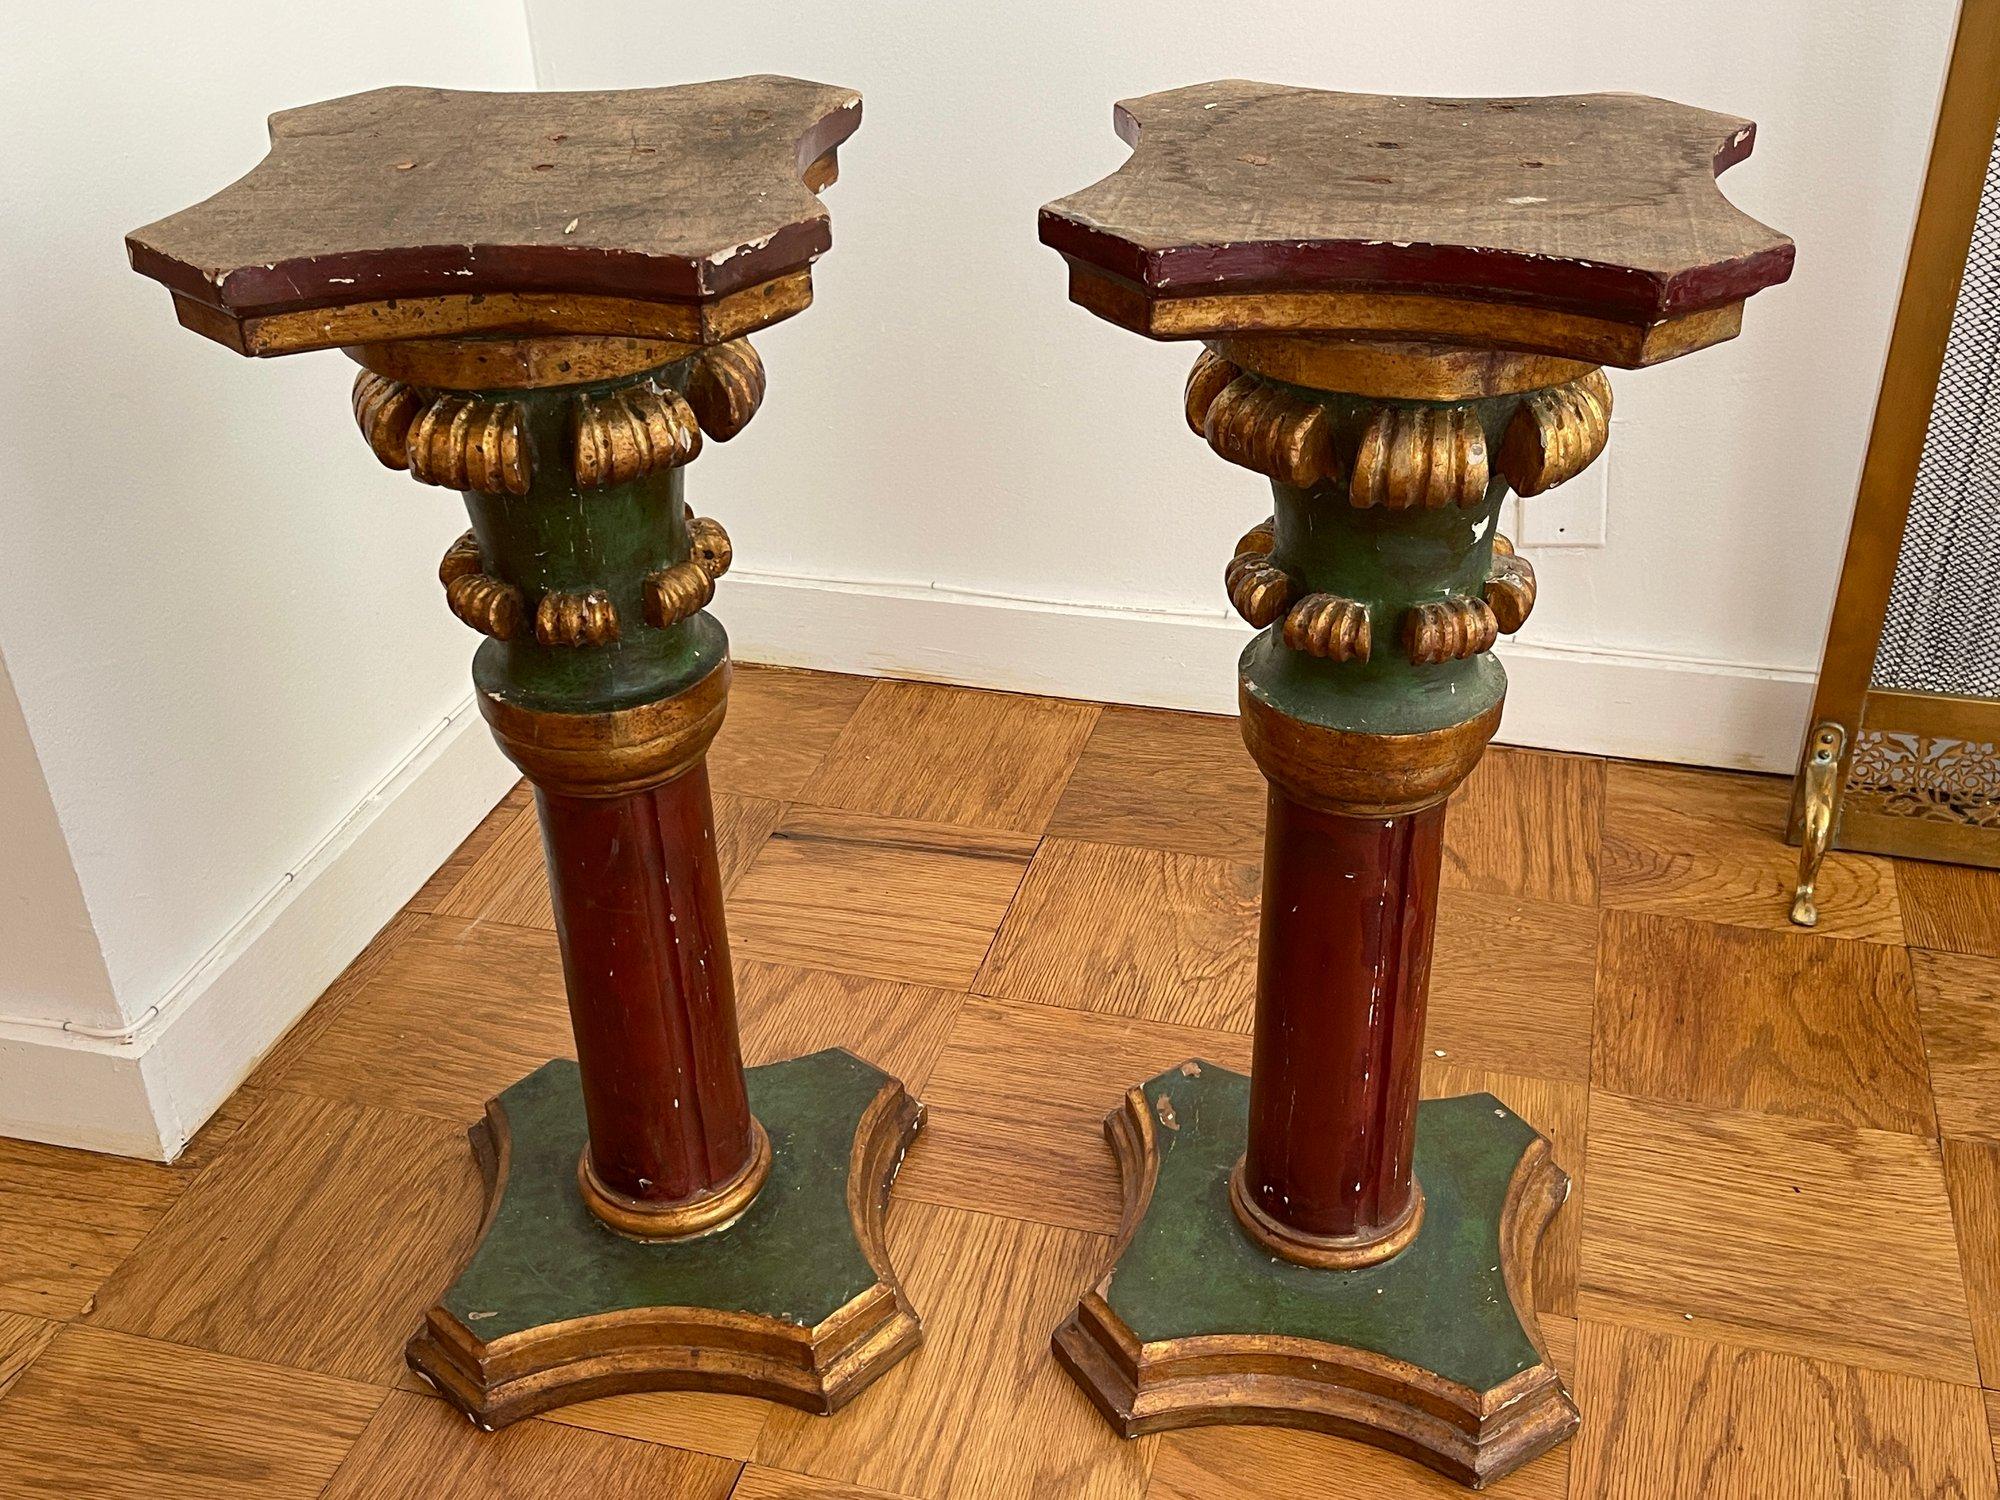 19th Century Wooden Columns - A Pair